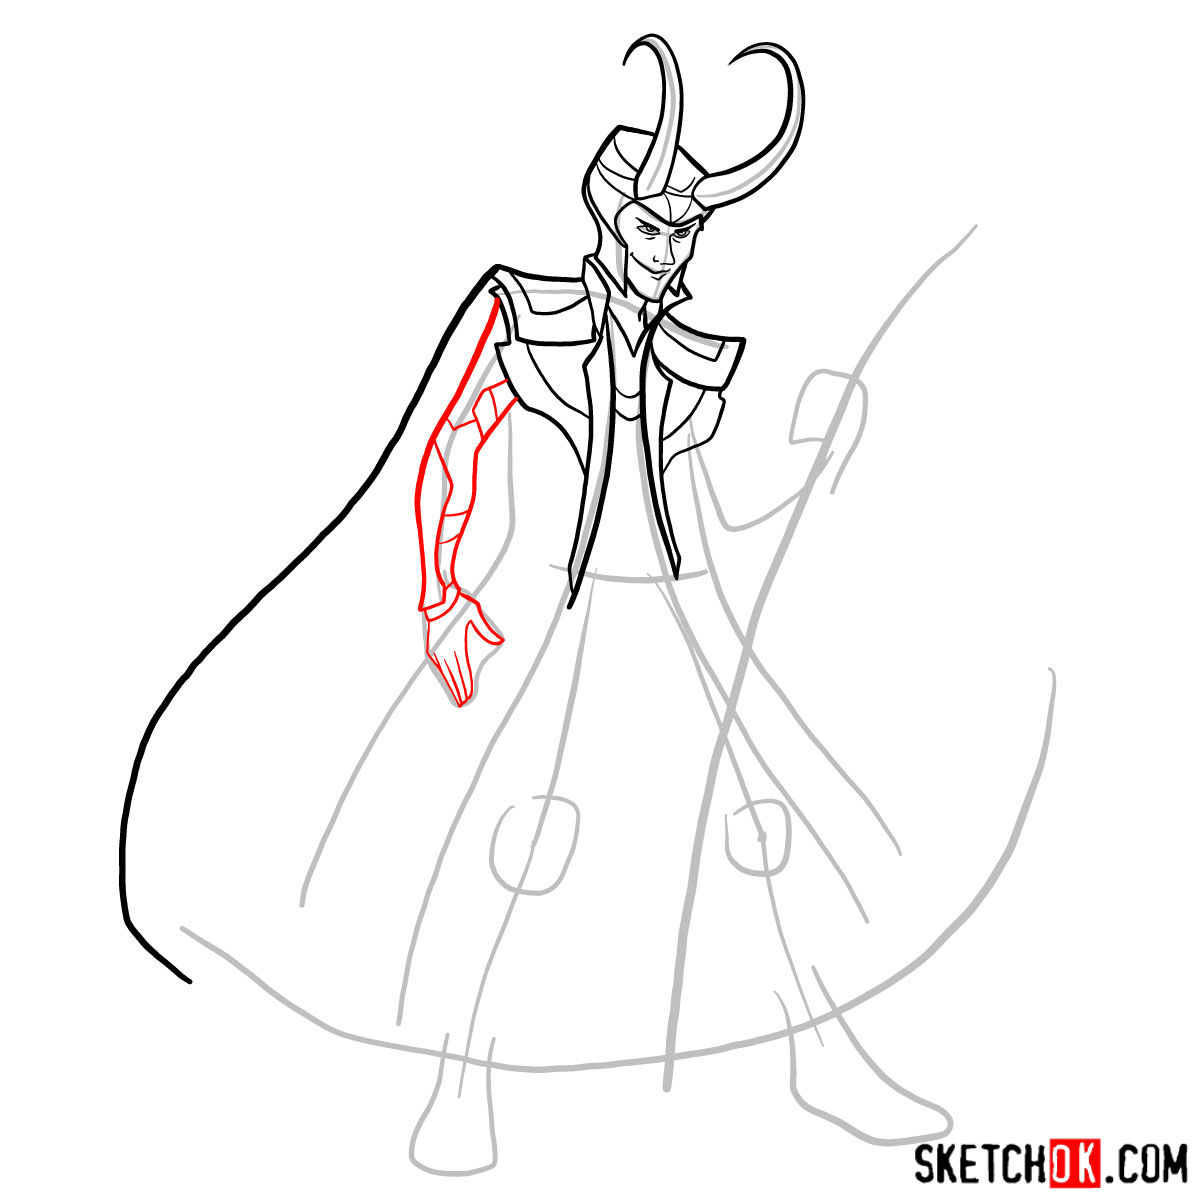 How to draw Loki - Marvel Comics villian - step 09